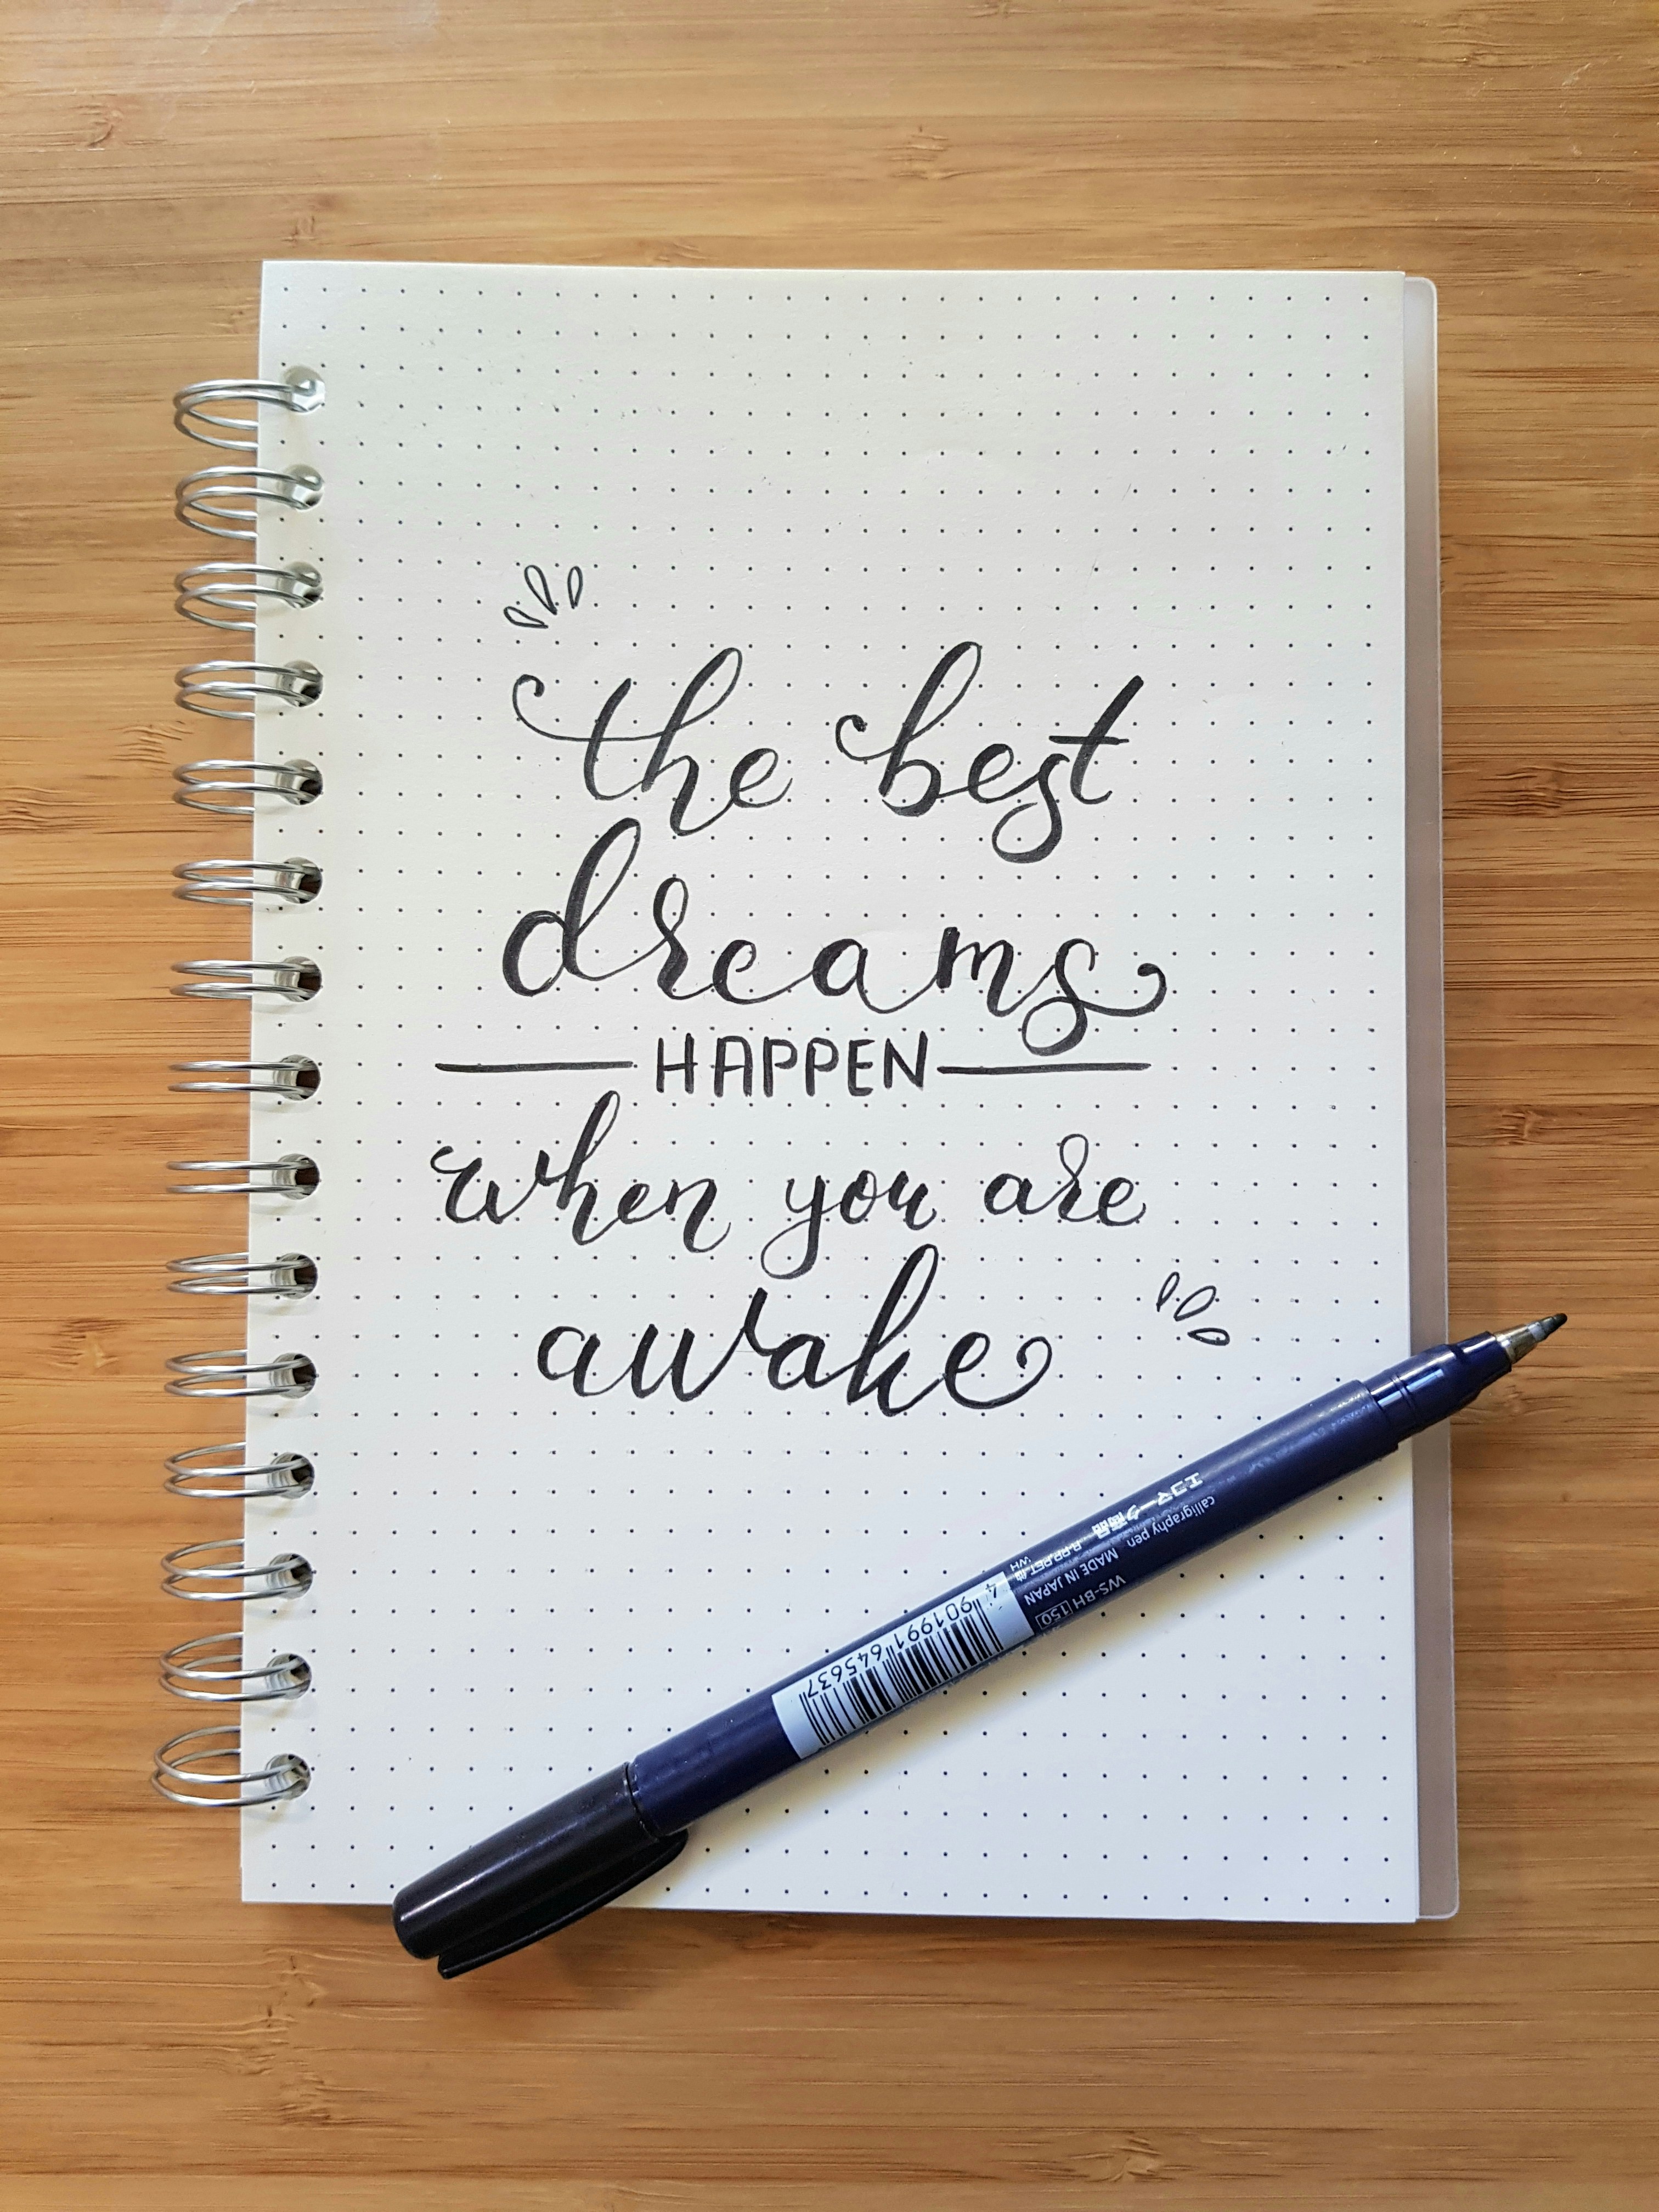 Calligraphy quotes - dreams